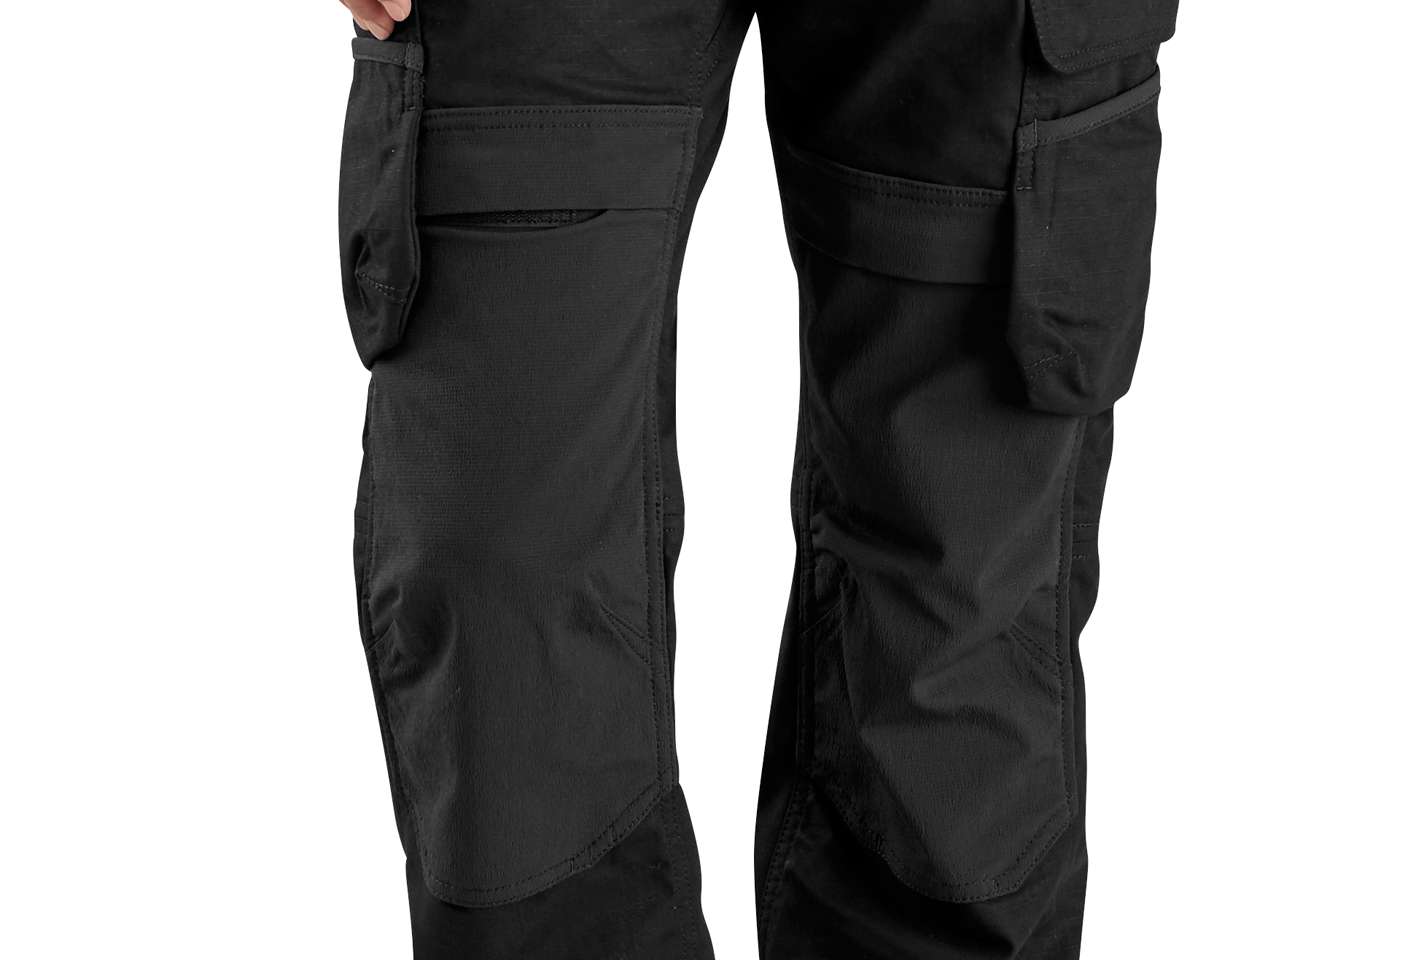 Flex CORDURA® secure flap-closure knee pad pockets